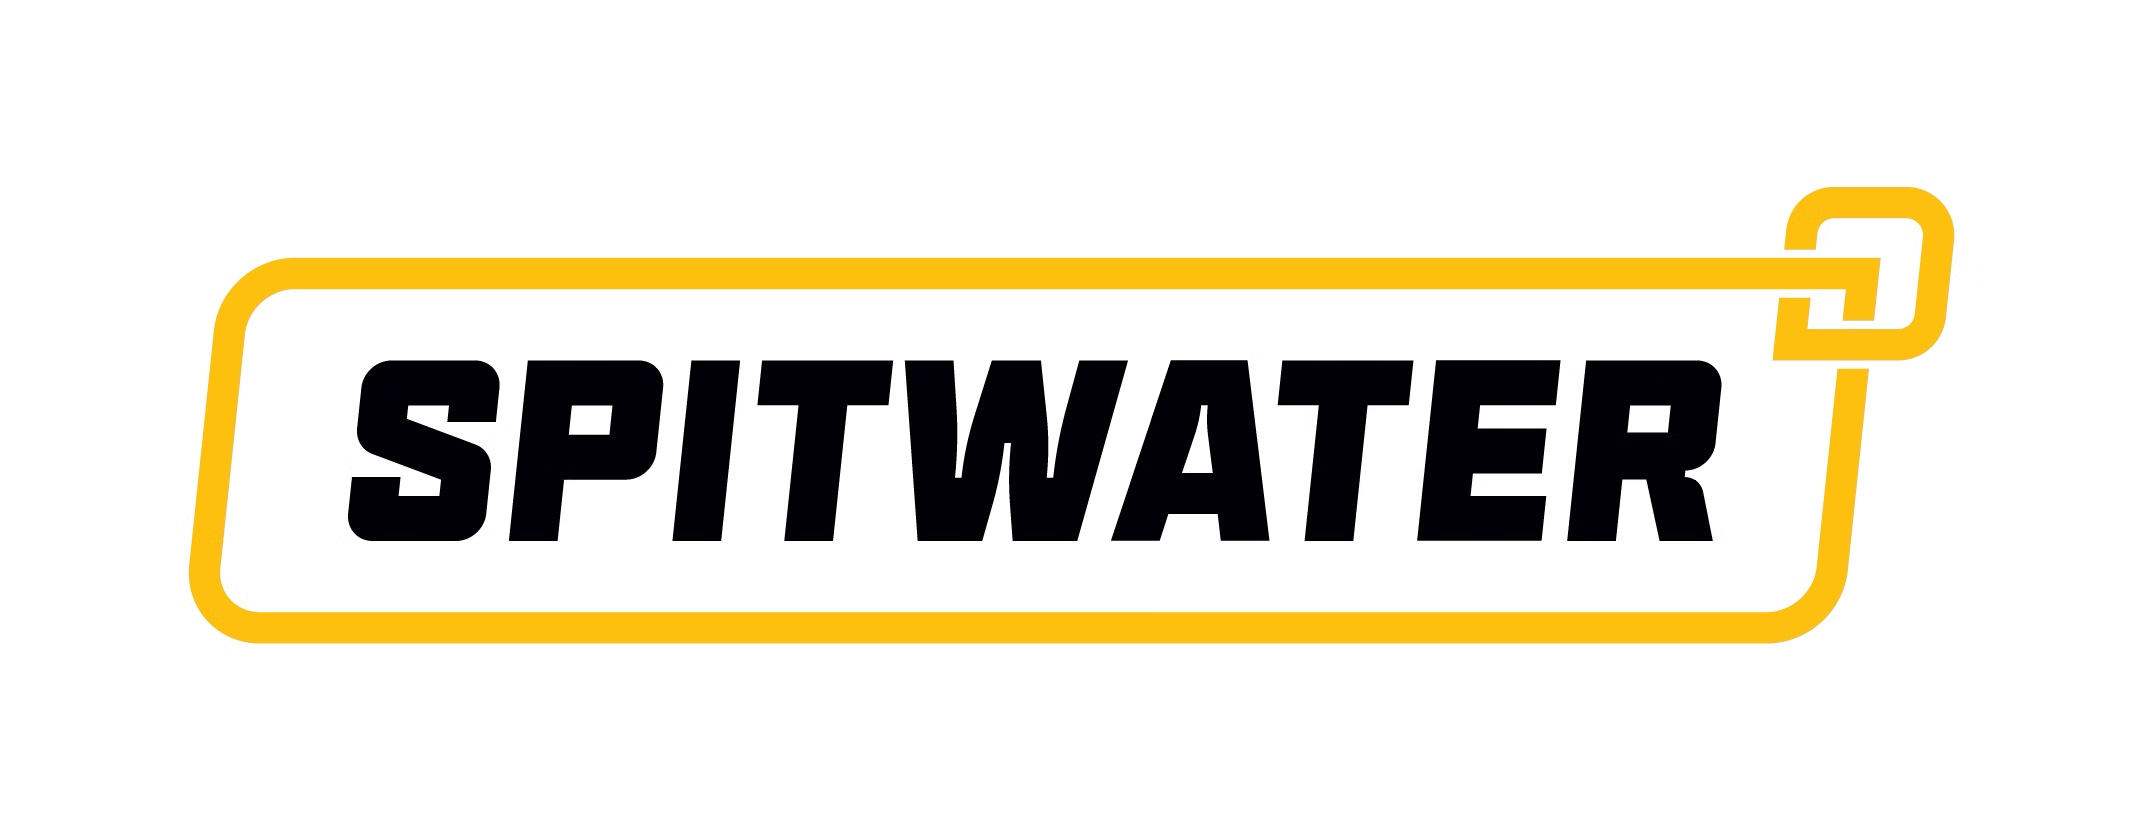 Spitwater Customer Handover Form